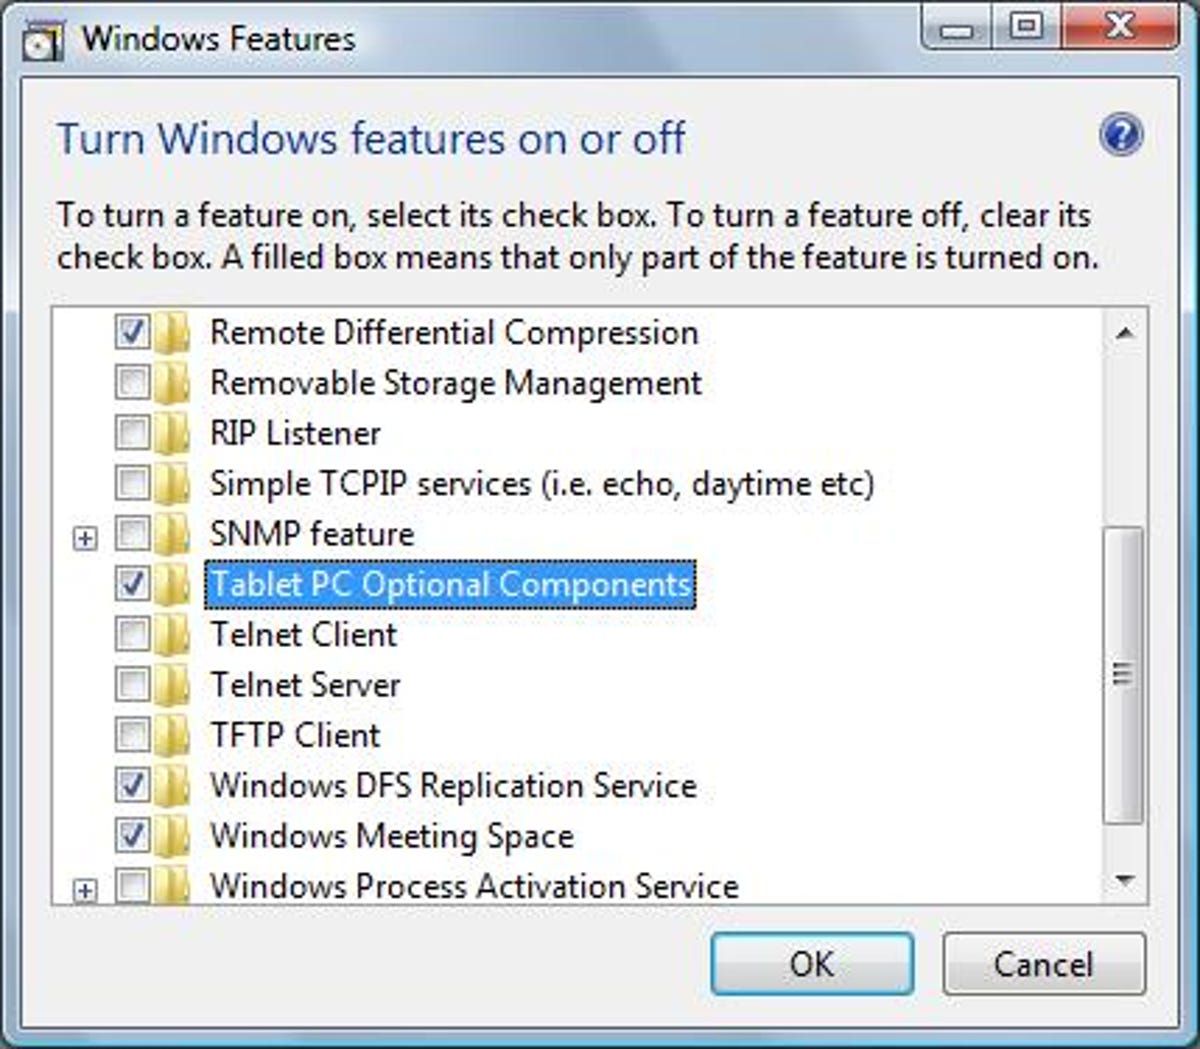 Windows Vista's "Turn Windows features on or off" dialog box